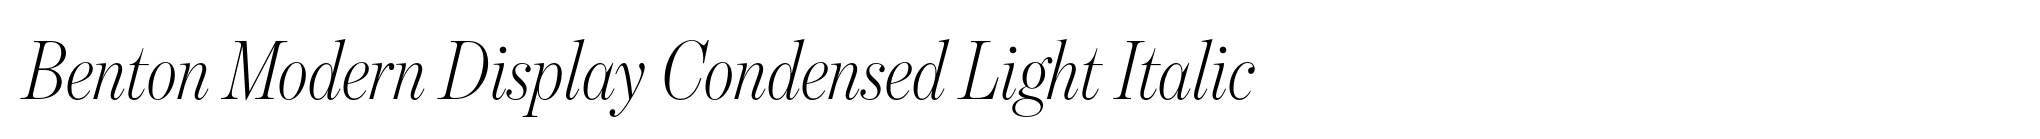 Benton Modern Display Condensed Light Italic image